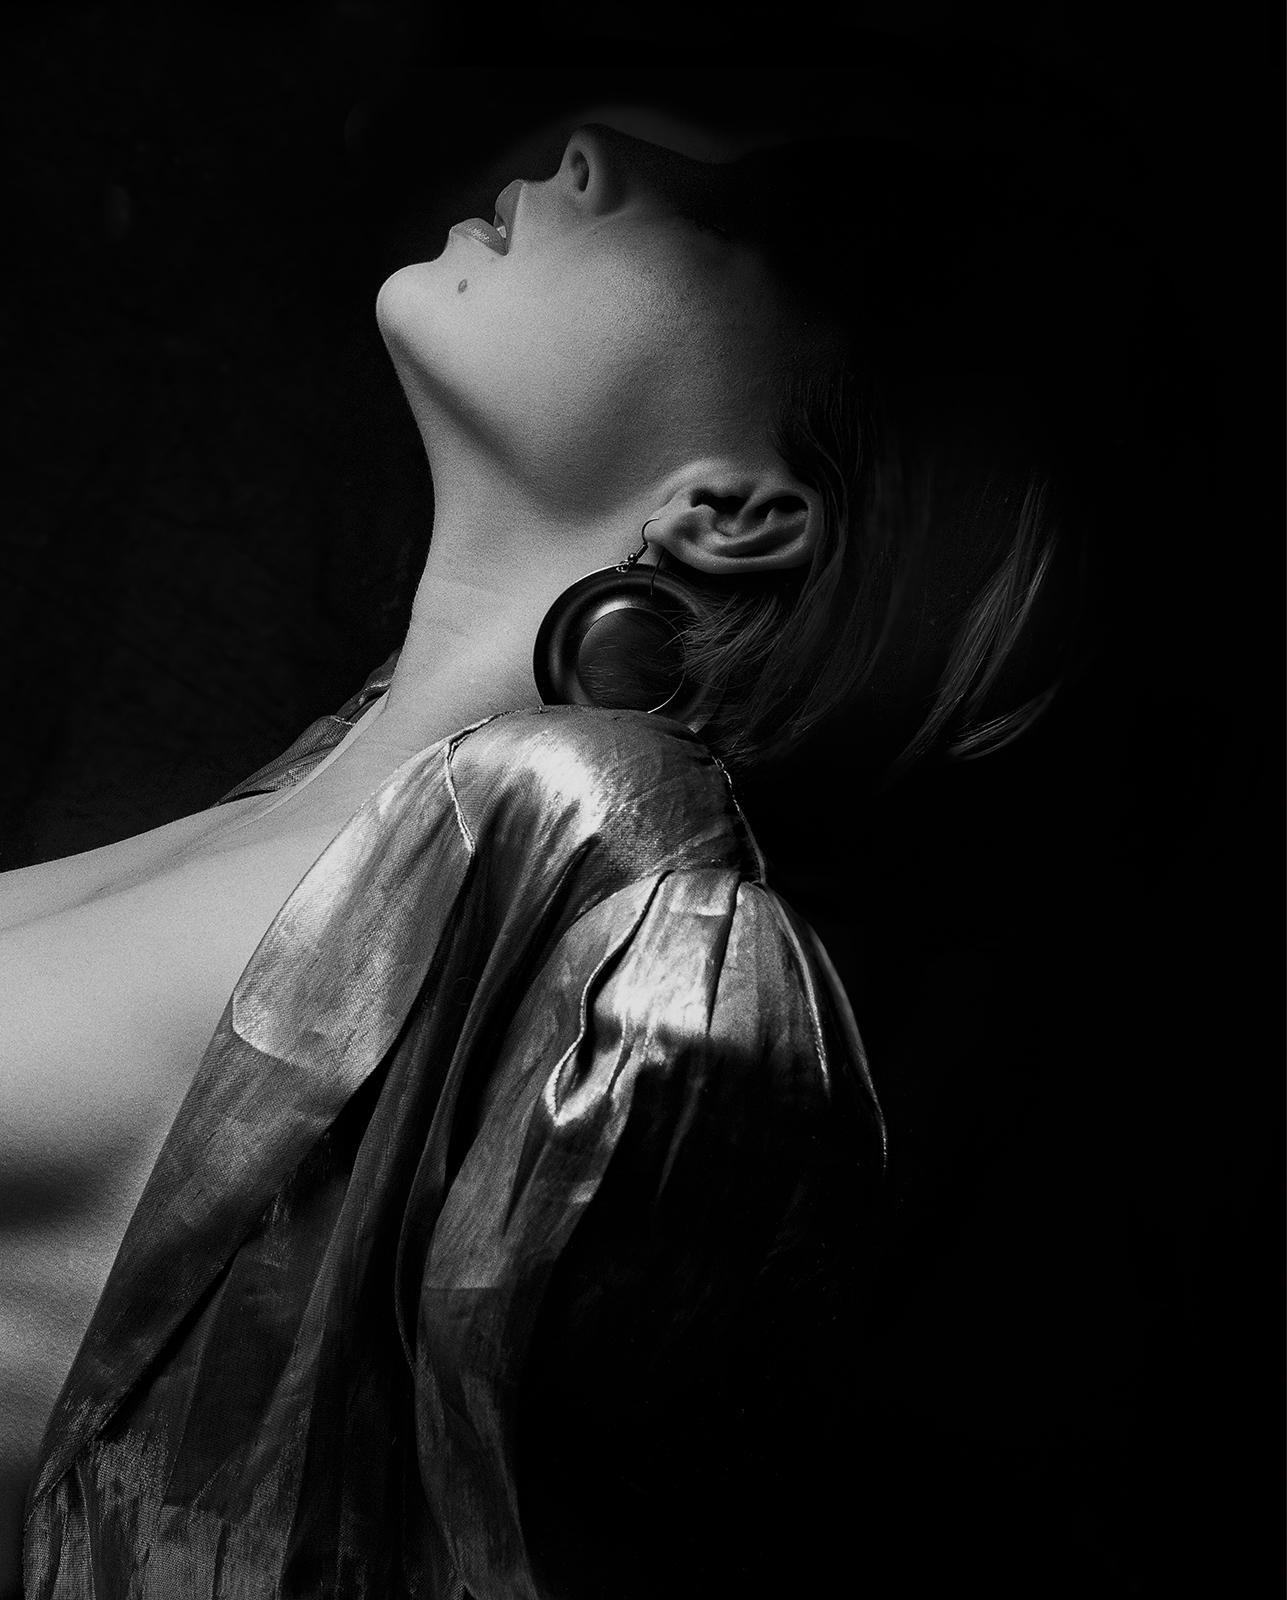 Francesca- Signed limited edition nude print, Black white, Woman profile portrait  - Photograph by Ian Sanderson